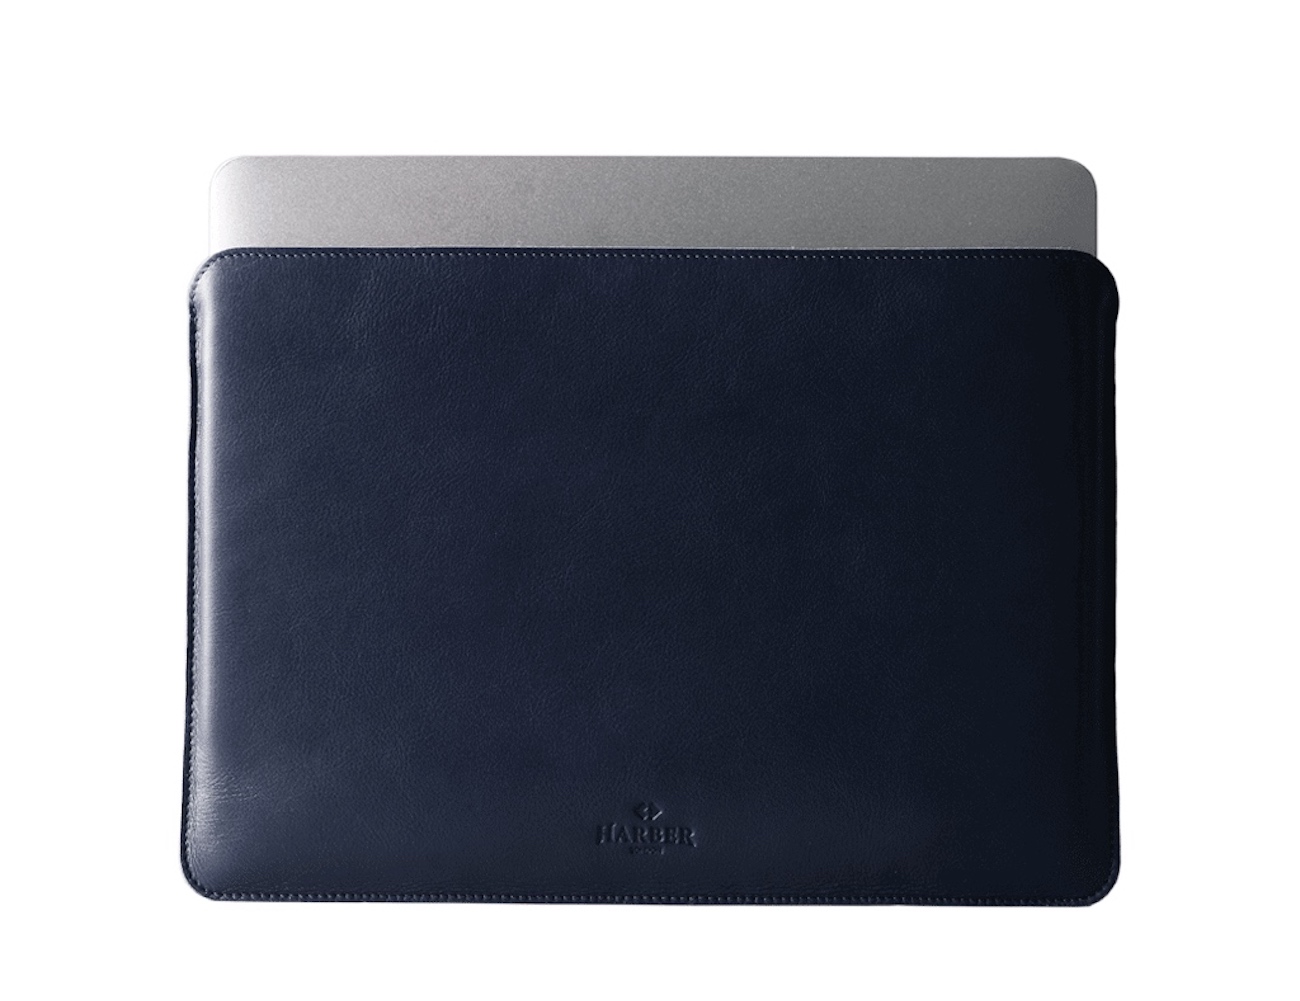 Harber London Slim Leather Macbook Sleeve Case » Gadget Flow